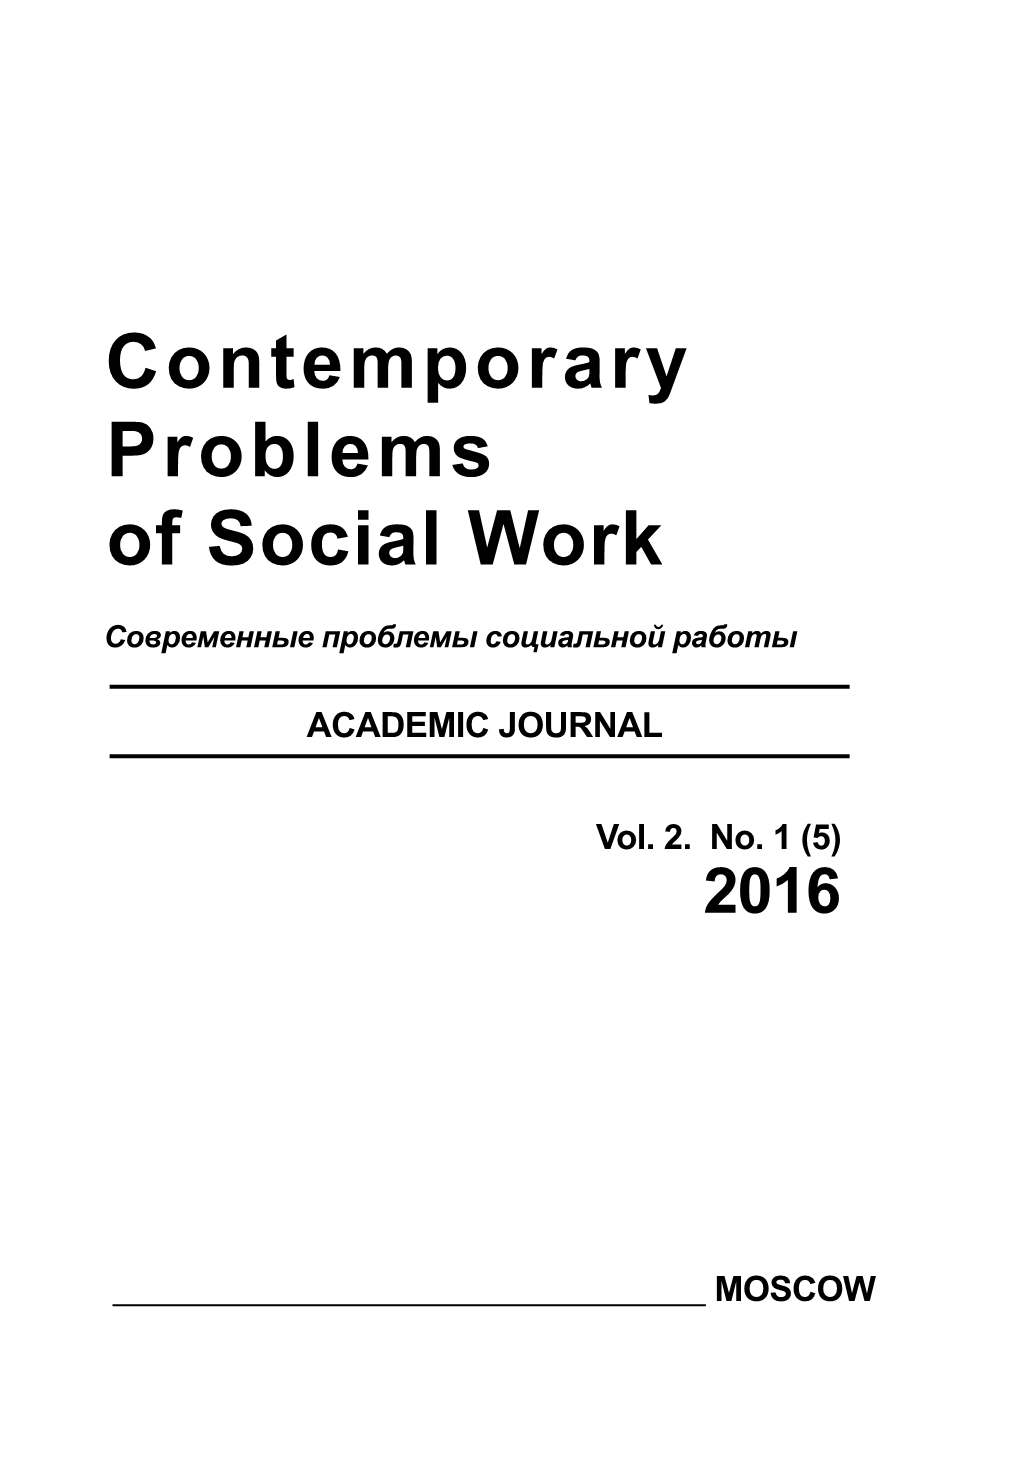 Contemporary Problems of Social Work